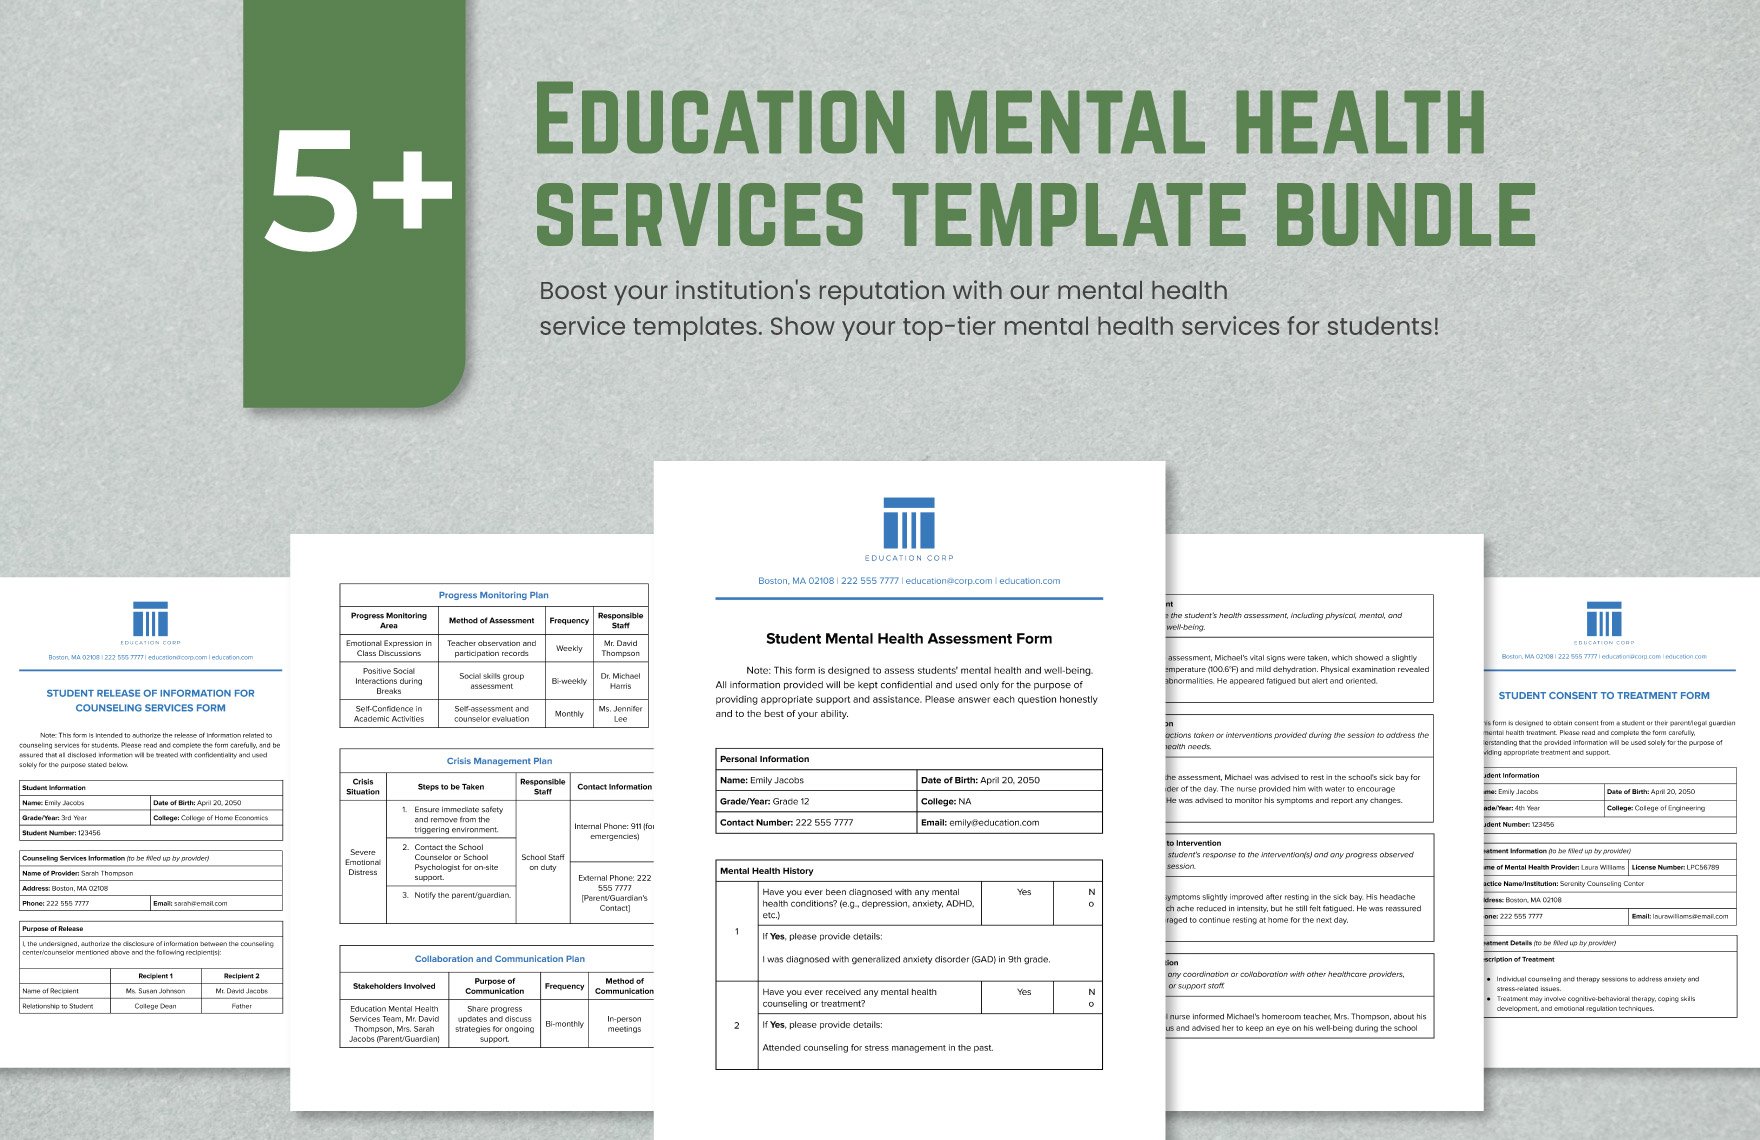 5+ Education Mental Health Services Template Bundle